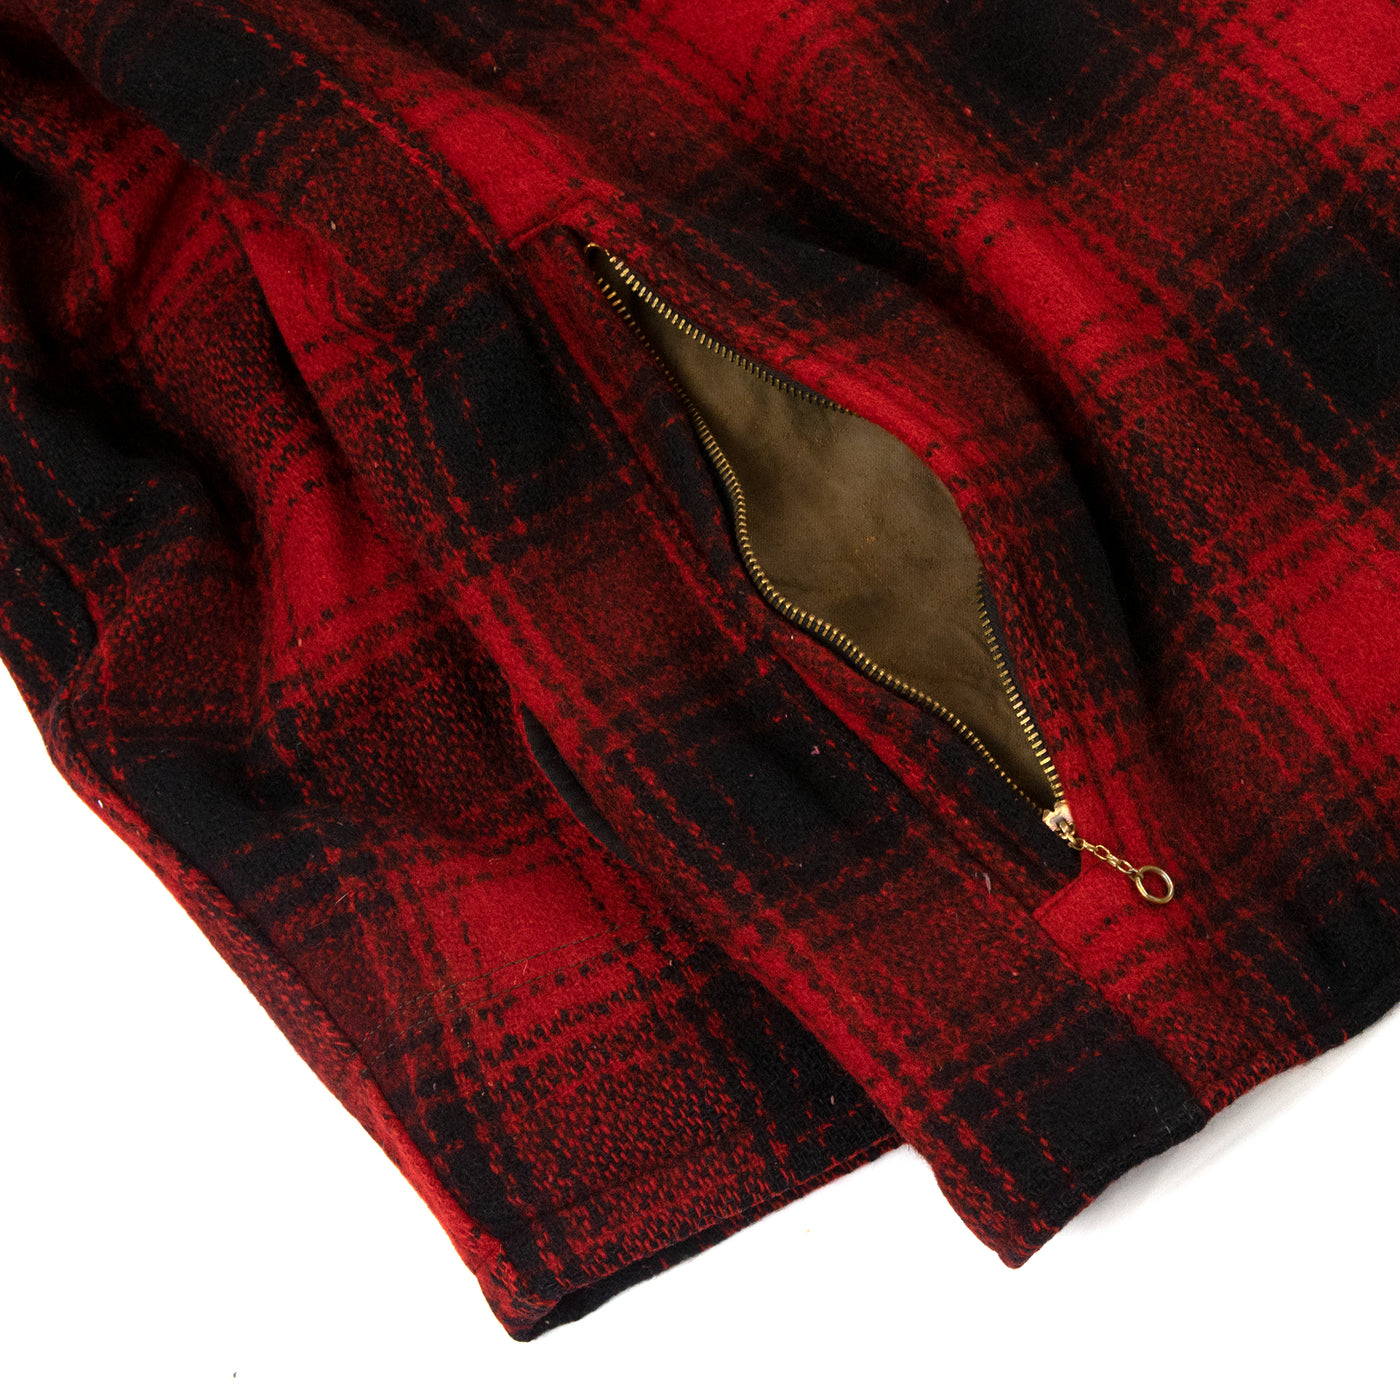 Vintage 1950's Drybak Wool Hunting Plaid Mackinaw Jacket Made In U.S.A - M Zip